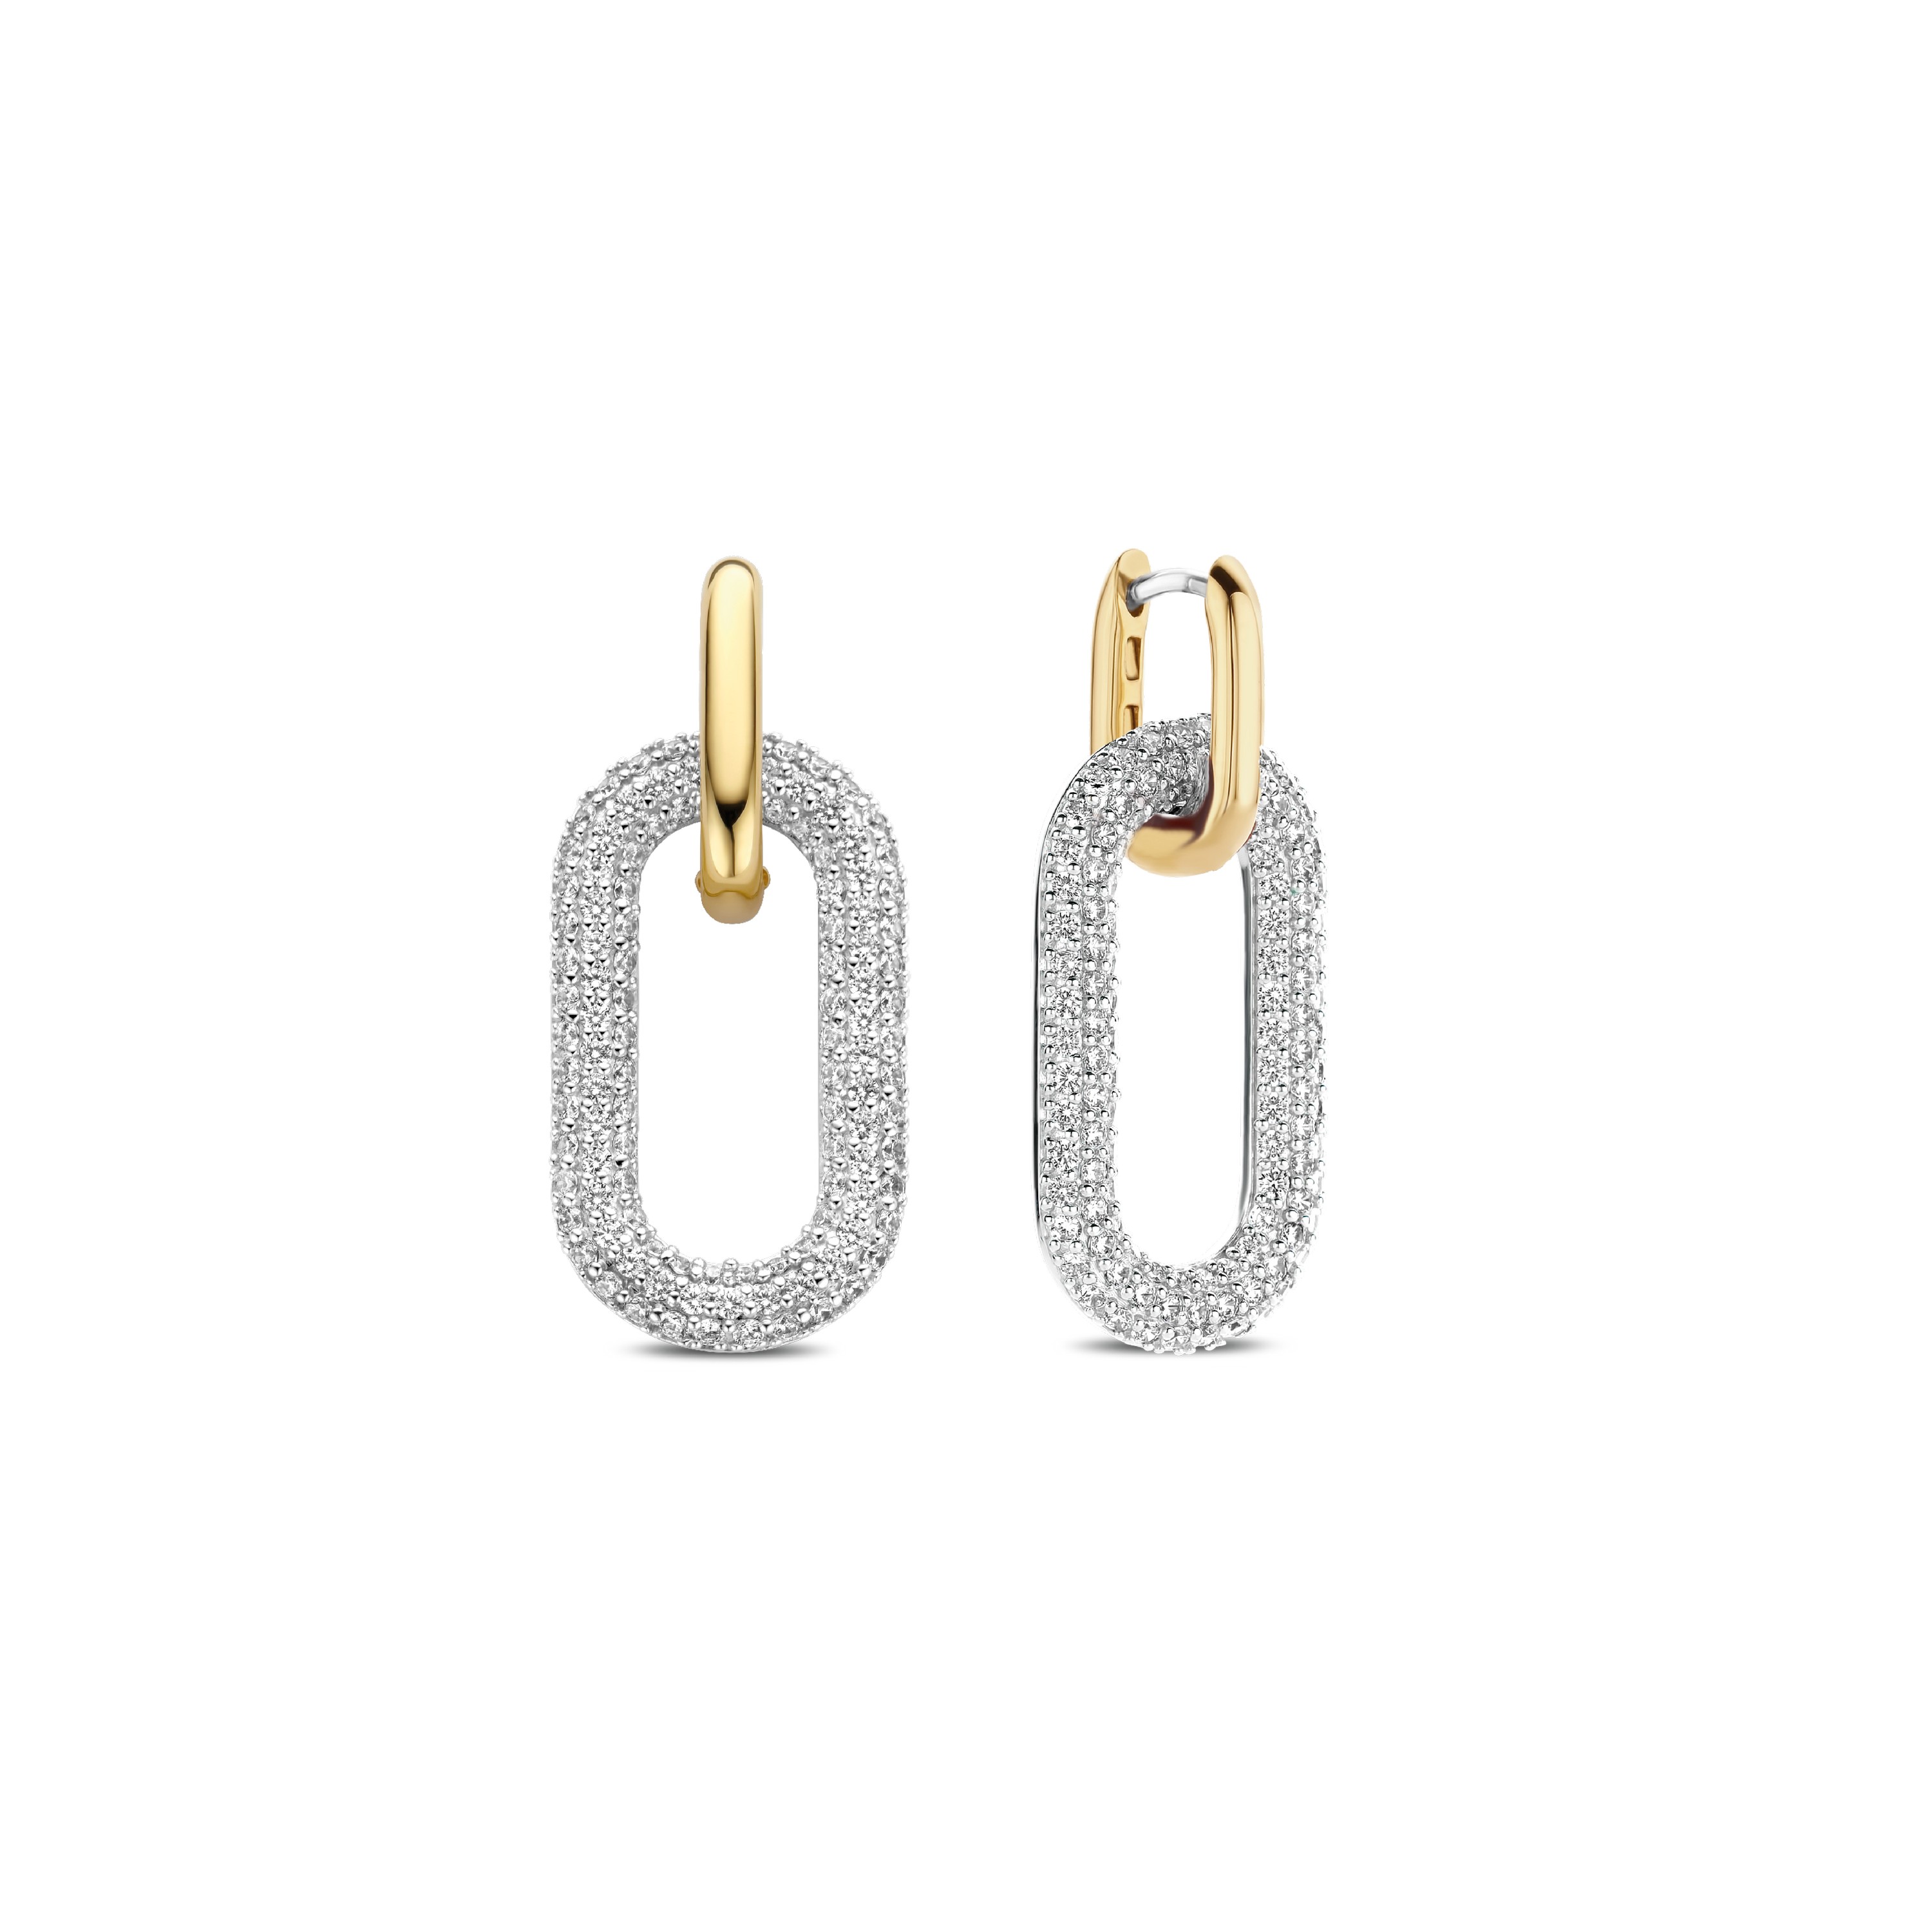 TI SENTO - Milano Earrings 7844ZY Gala Jewelers Inc. White Oak, PA